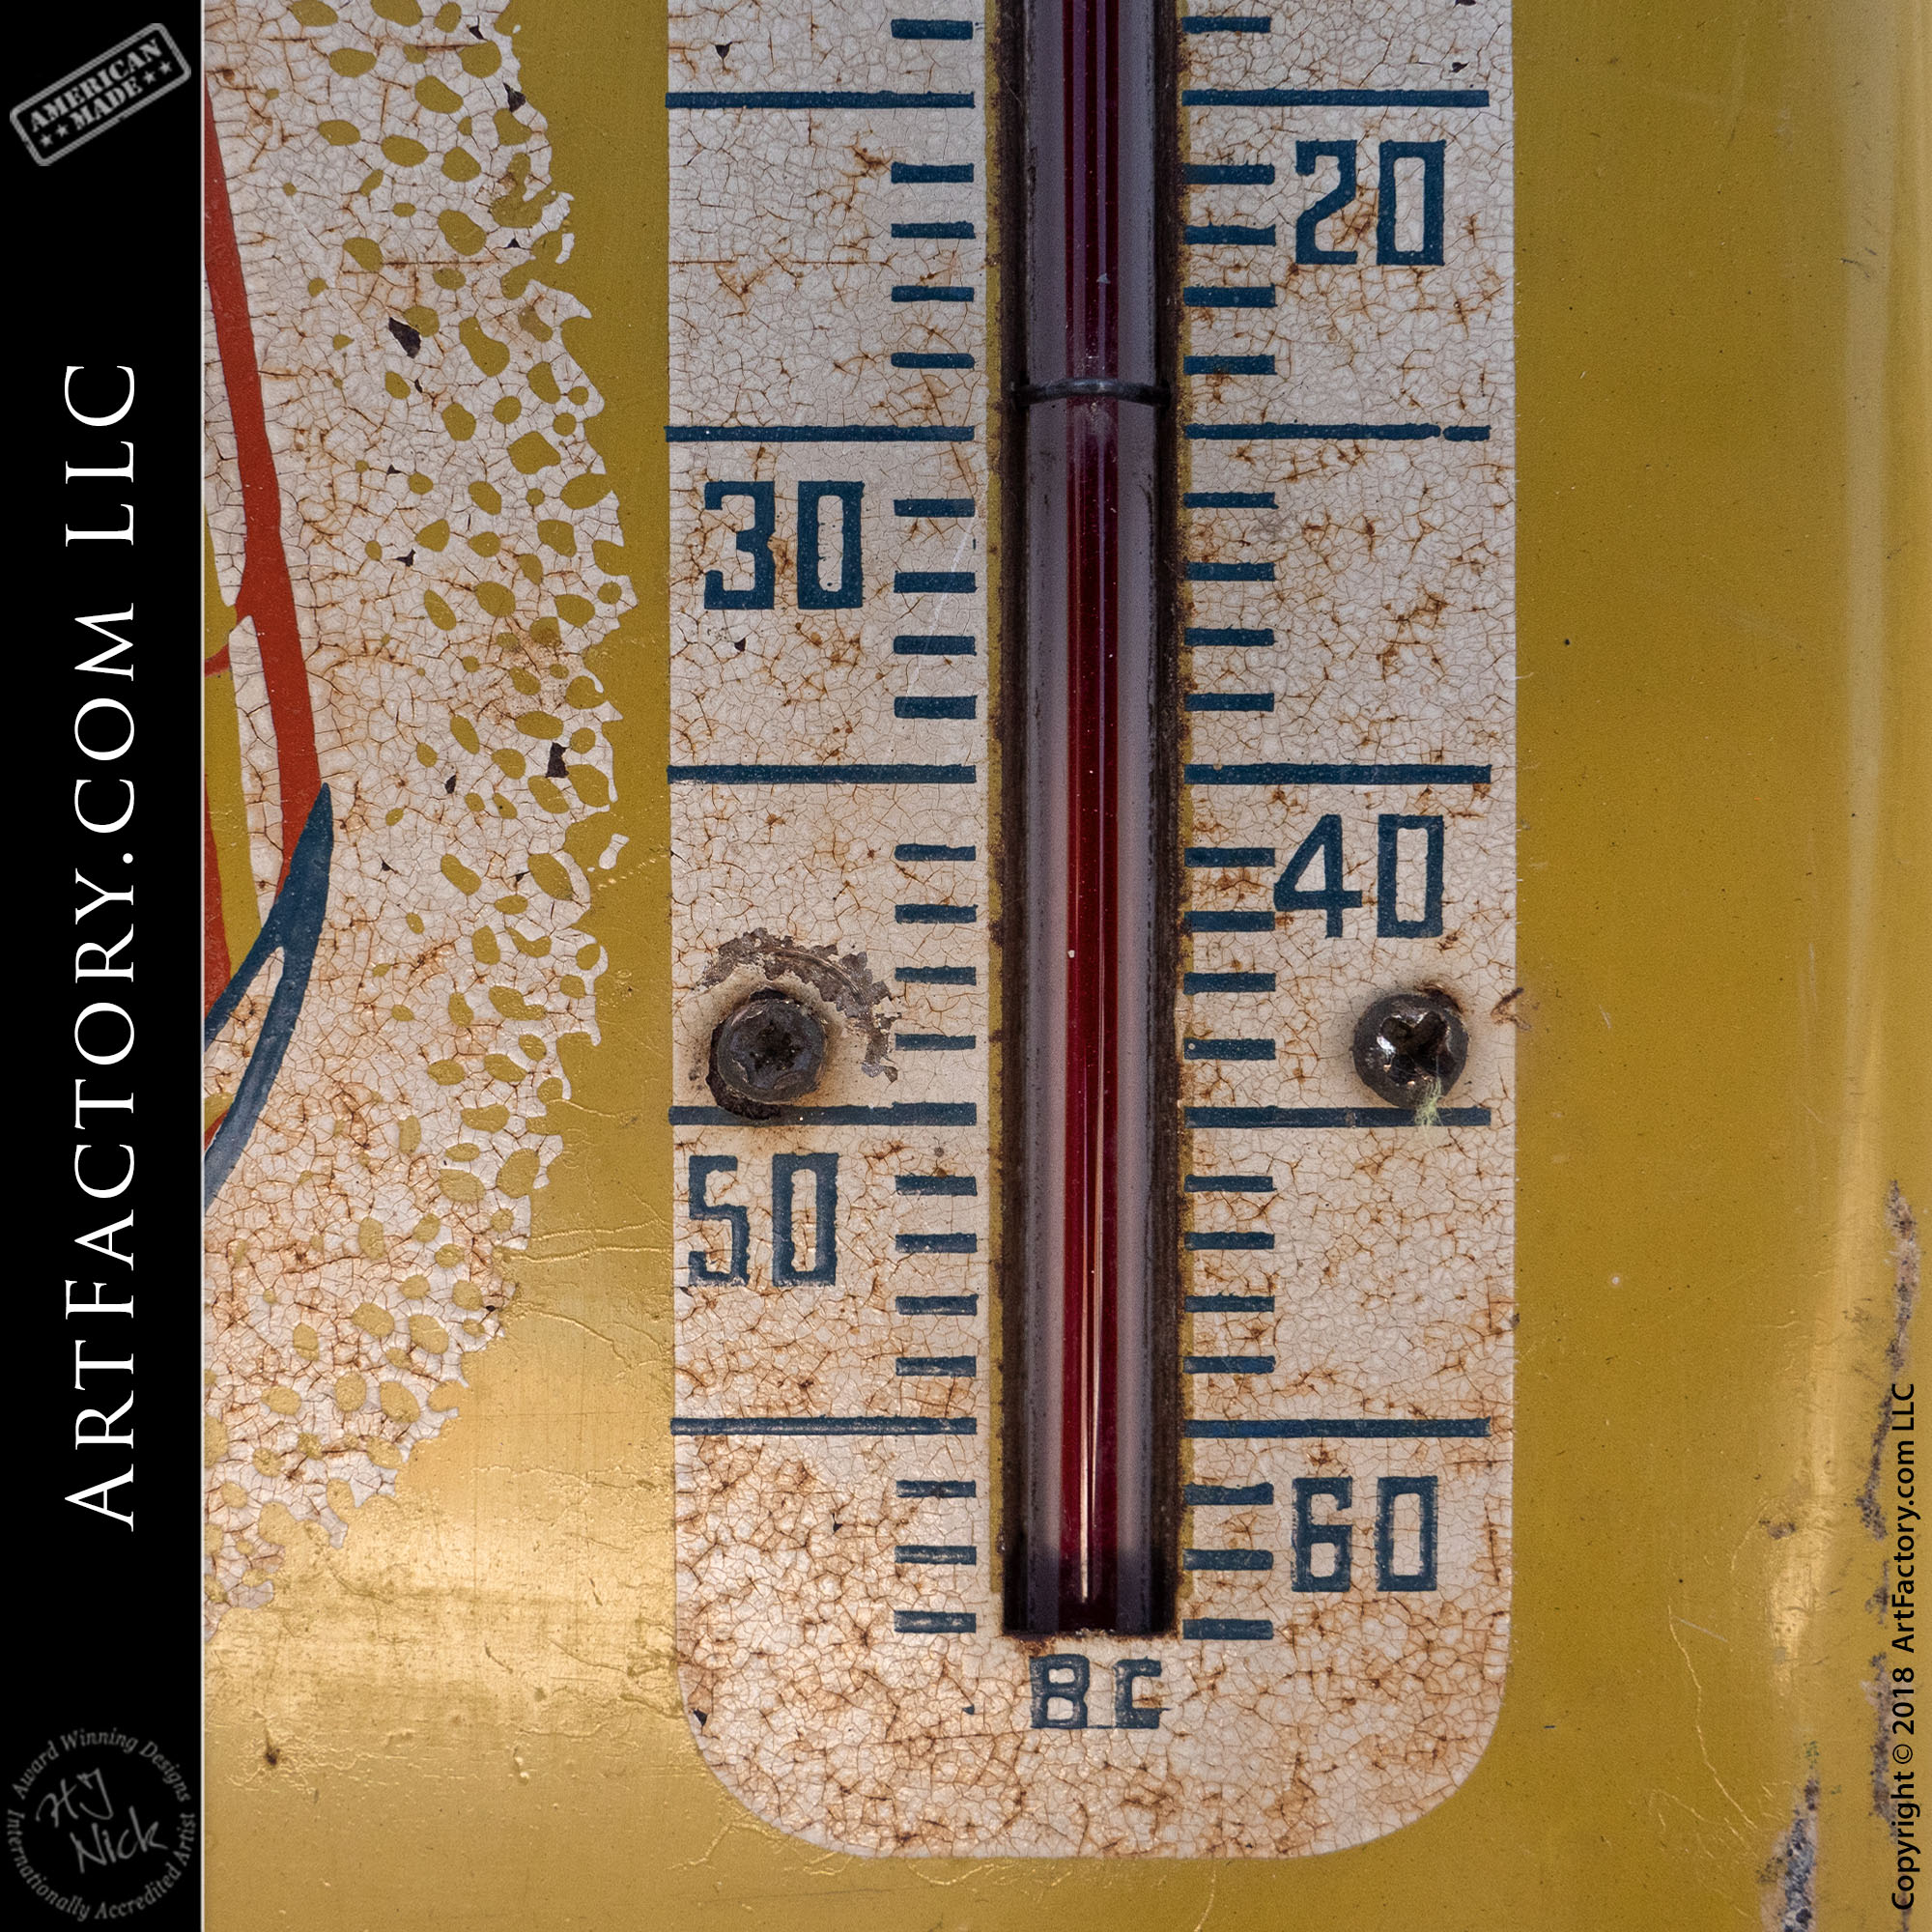 https://mancave.artfactory.com/wp-content/uploads/2019/10/Drink-Bireleys-Soda-Vintage-Thermometer-7.jpg